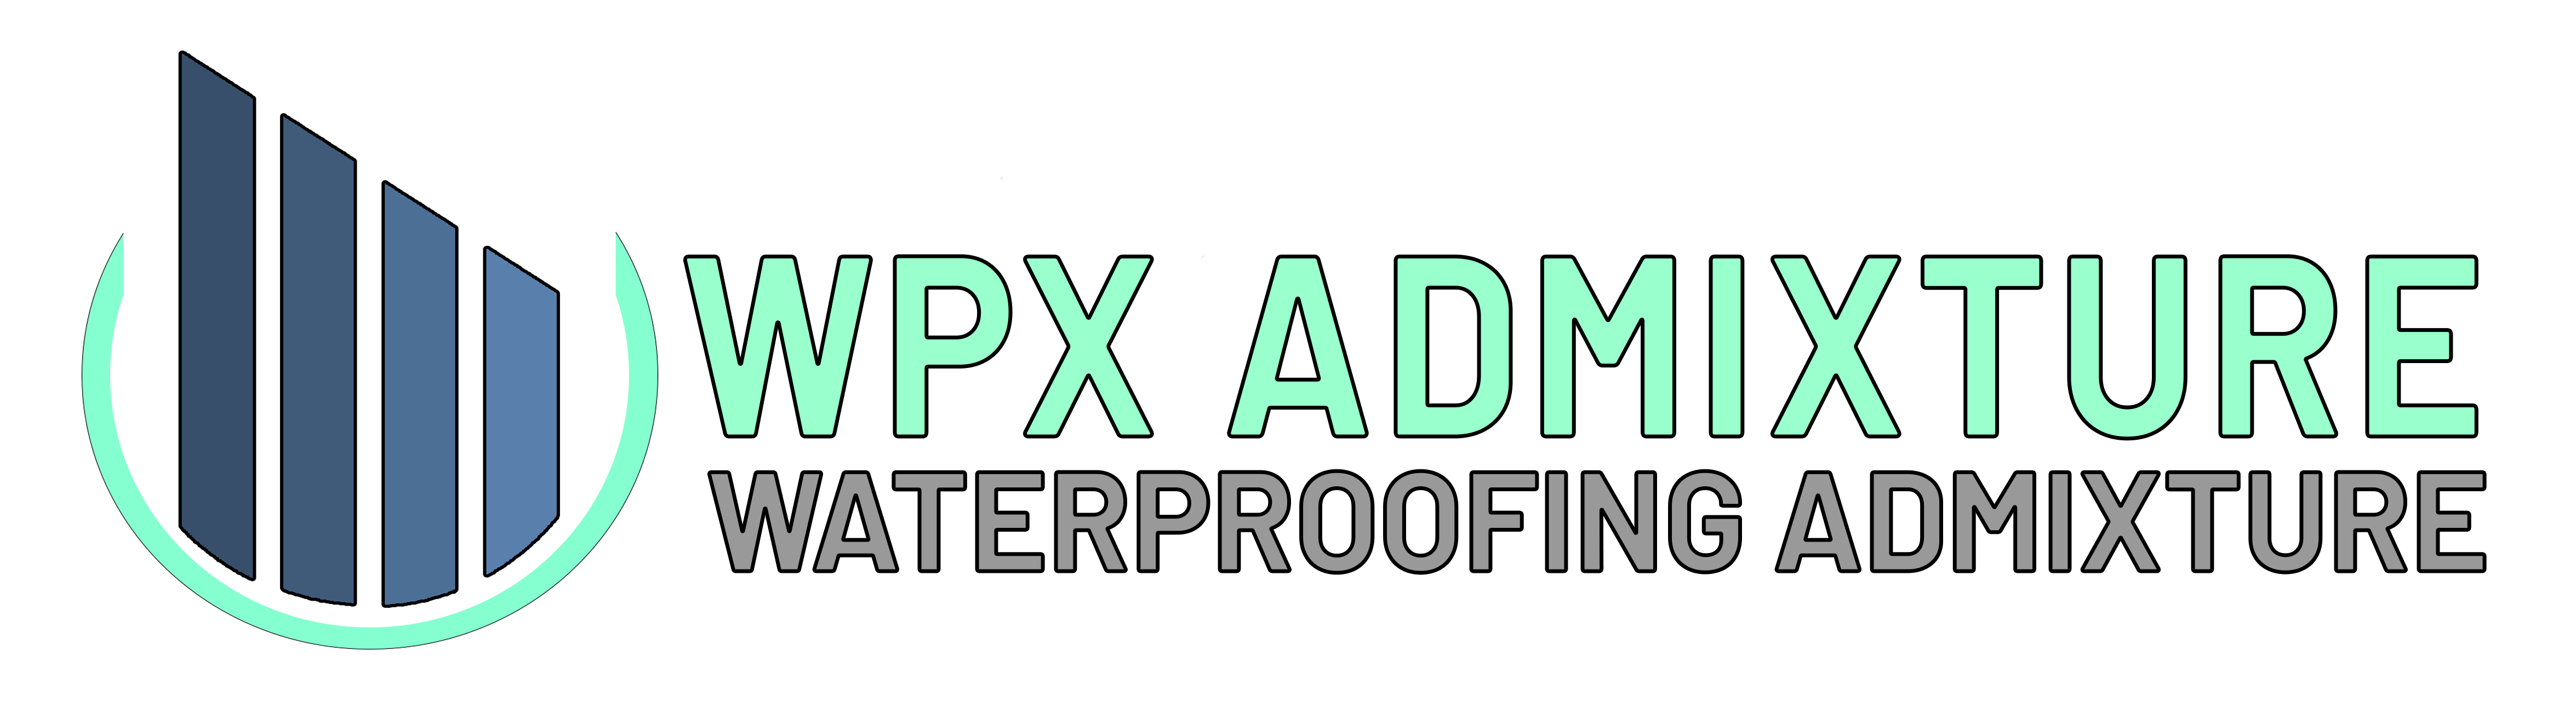 WPX Admixture